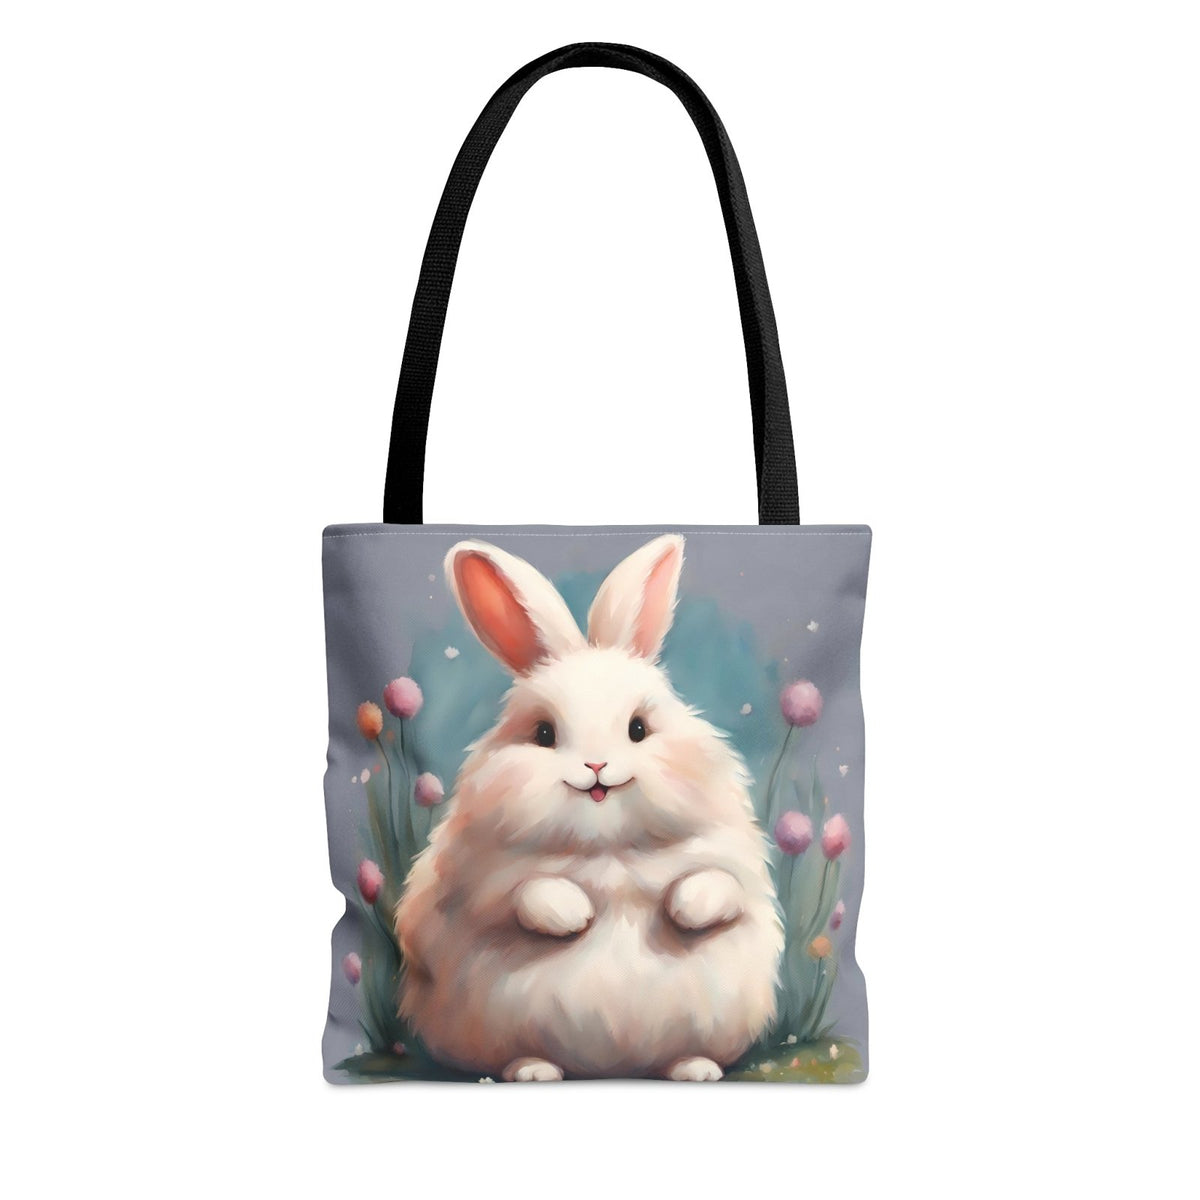 Bunny Bliss Tote Bag, adorable rabbit bag, cute bunny accessories - Subtle Blue M